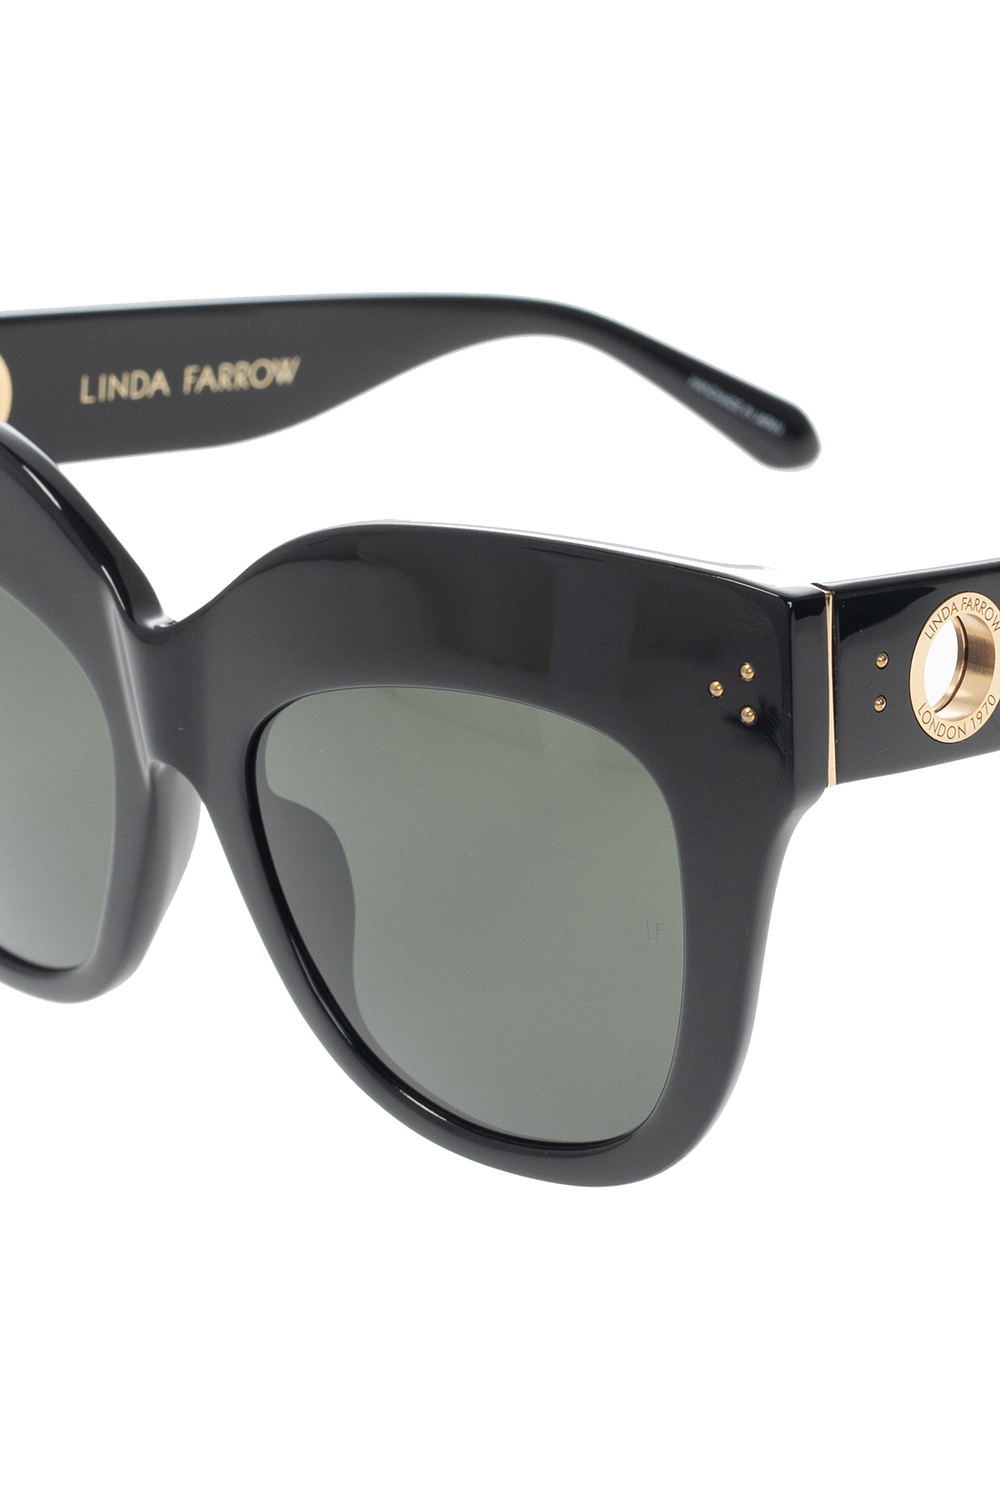 Linda Farrow Butter Sunglasses Gloss Black